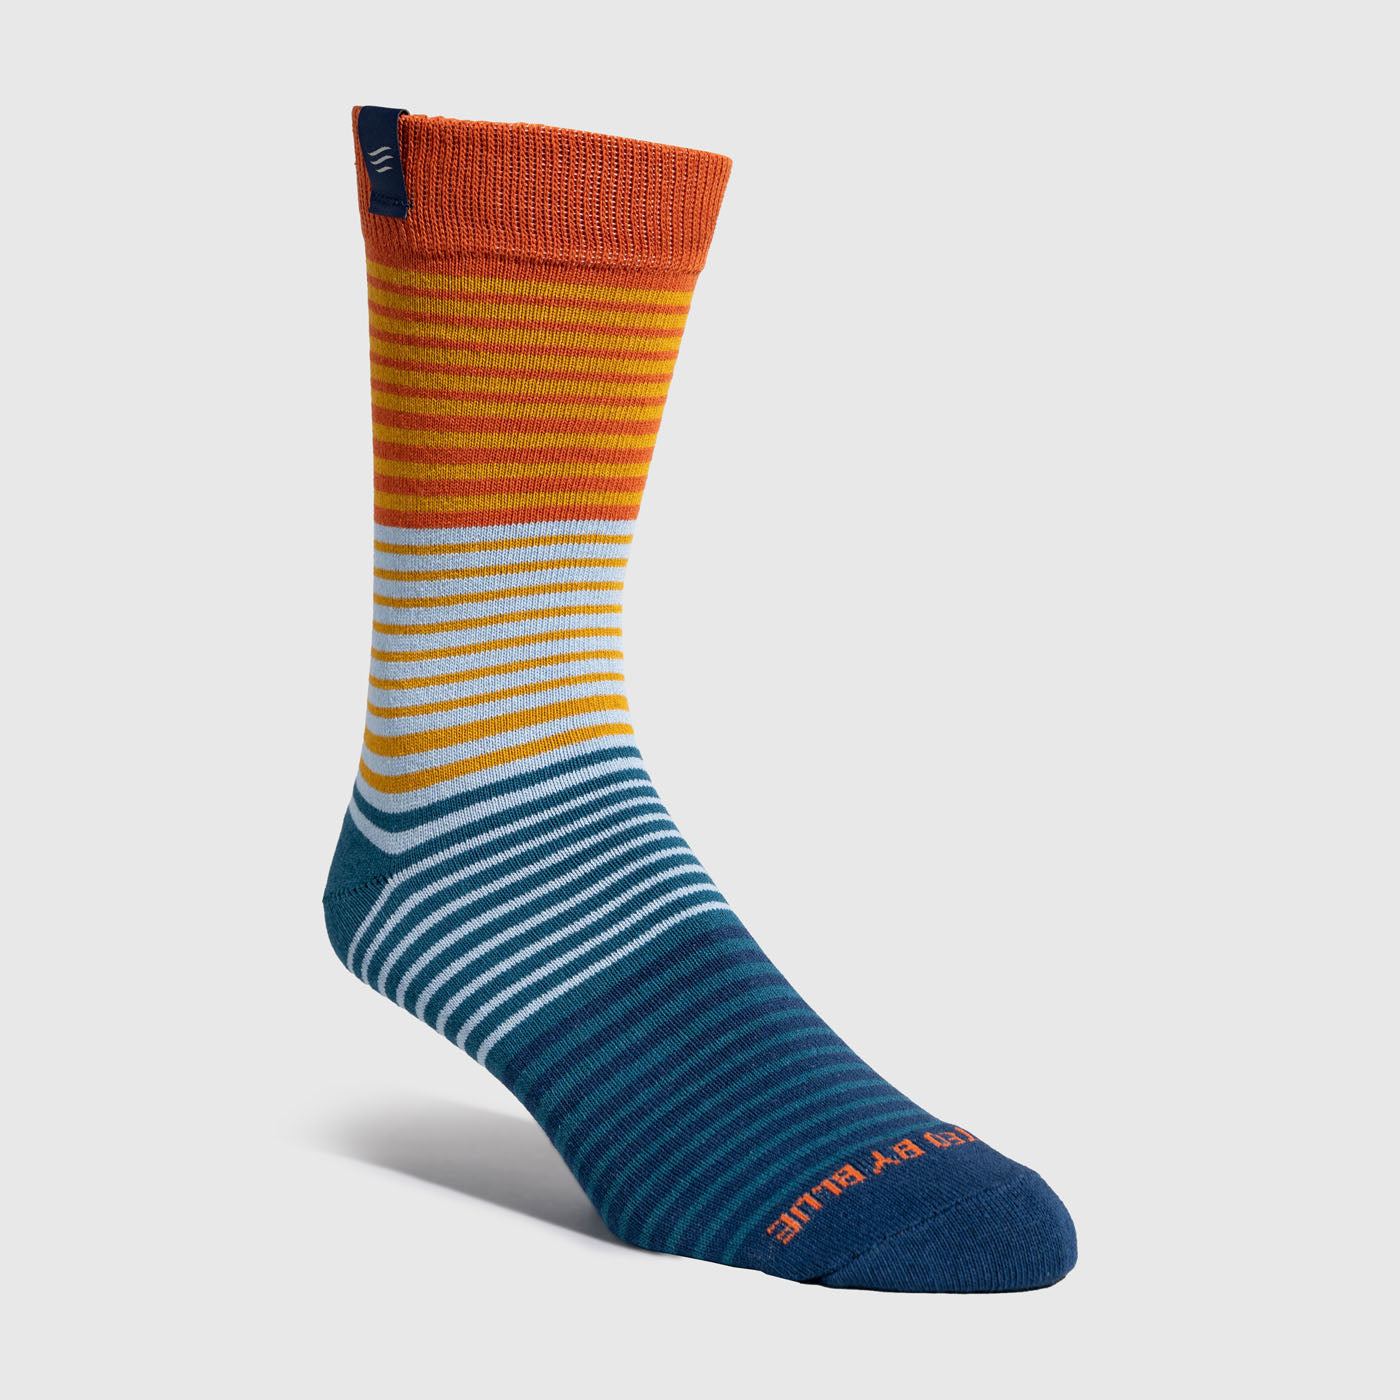 Long Hemp Boot Socks - 2 Pack – Kind Hemp Co.